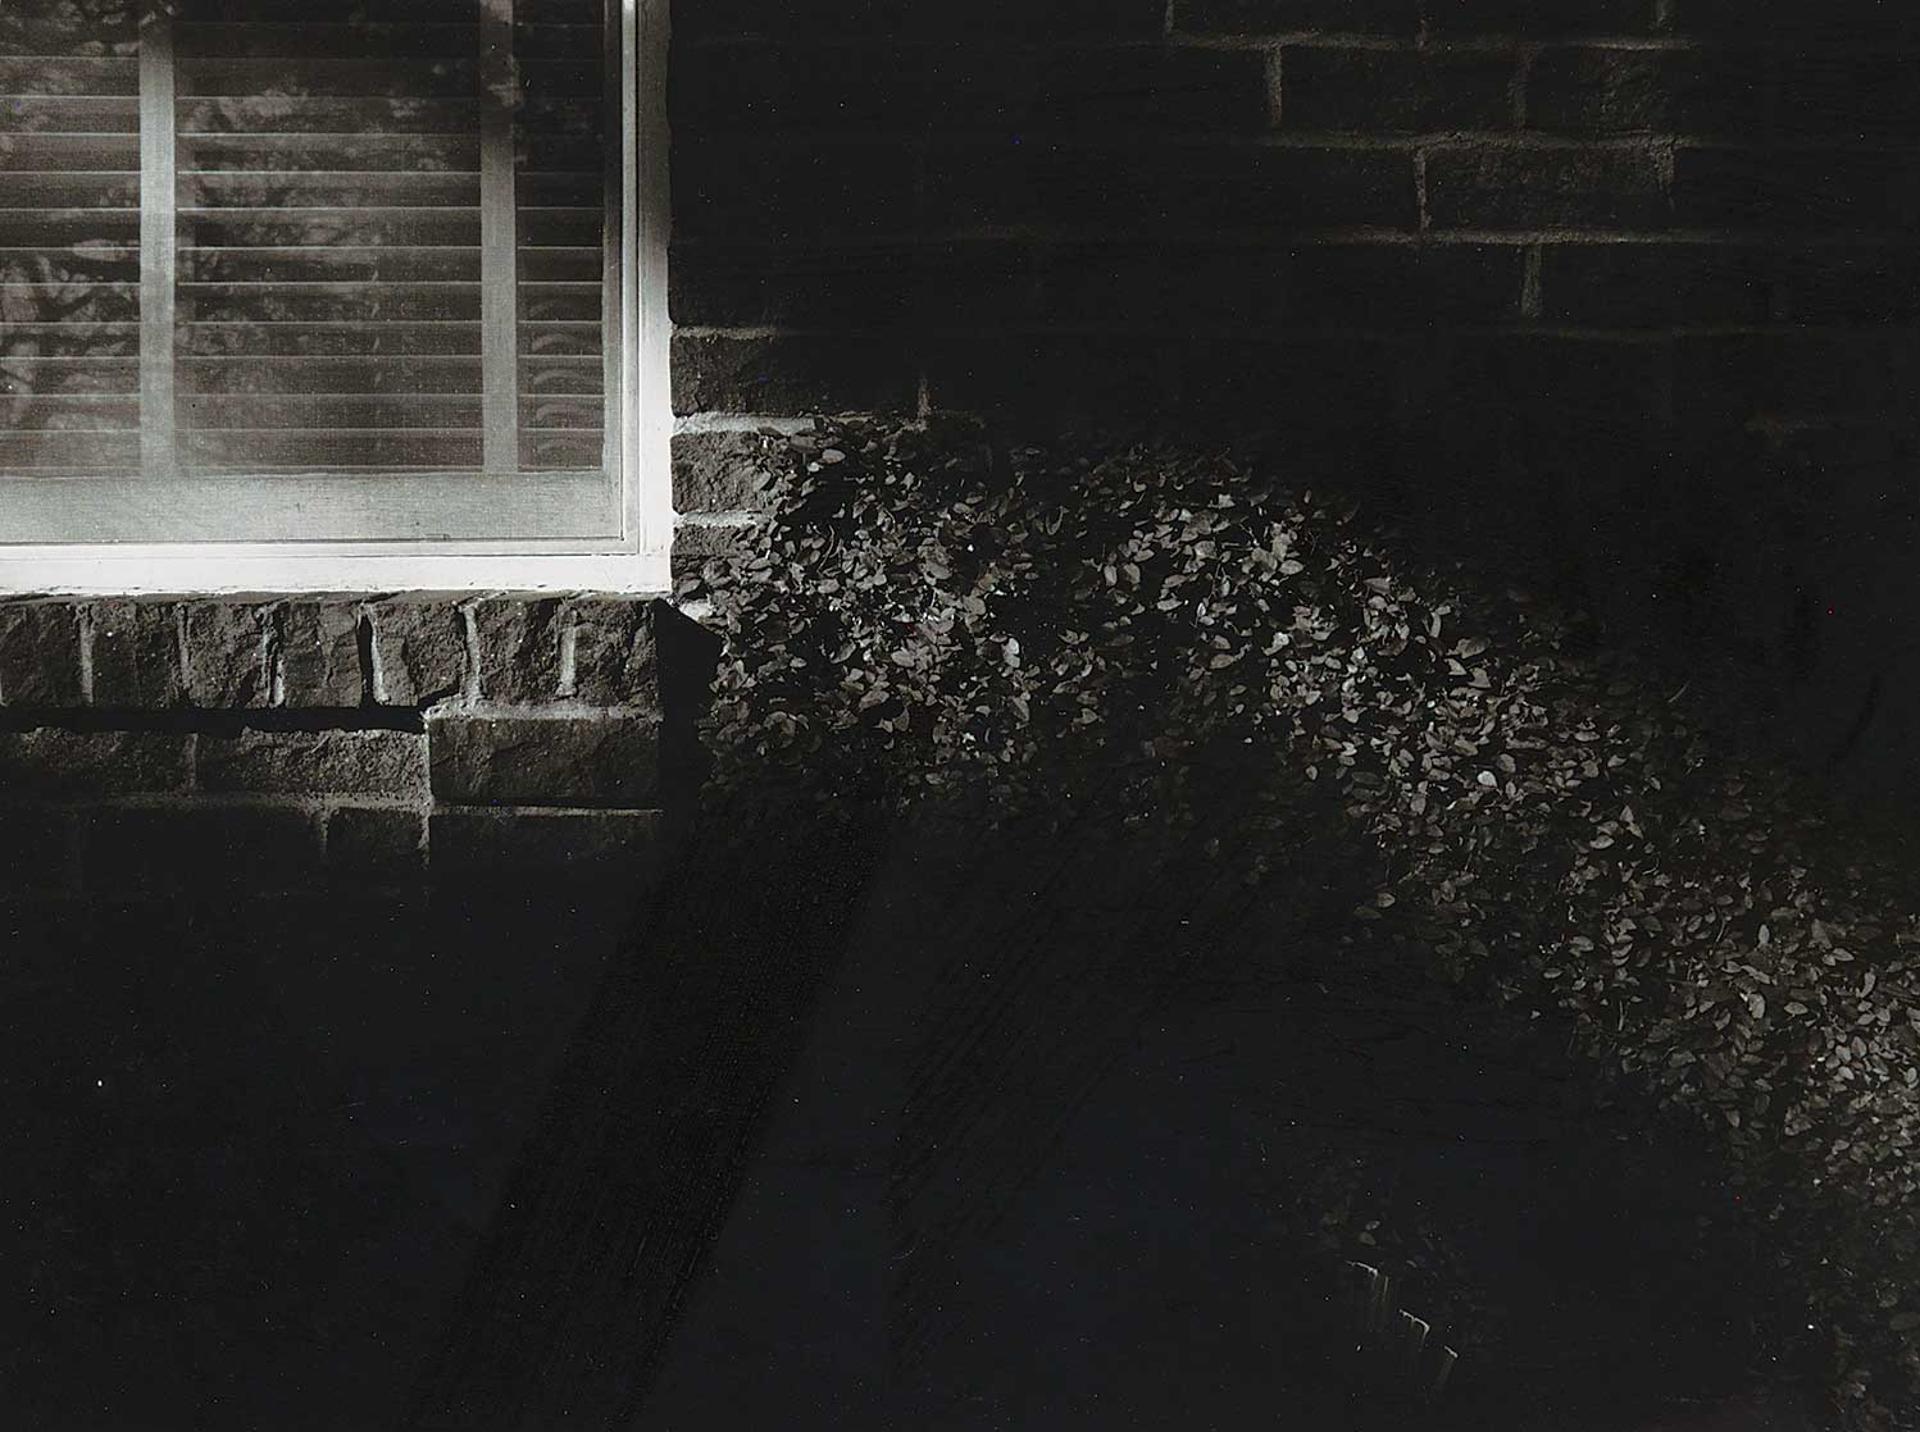 Edward Burtynsky (1955) - Untitled - Hedge and Window